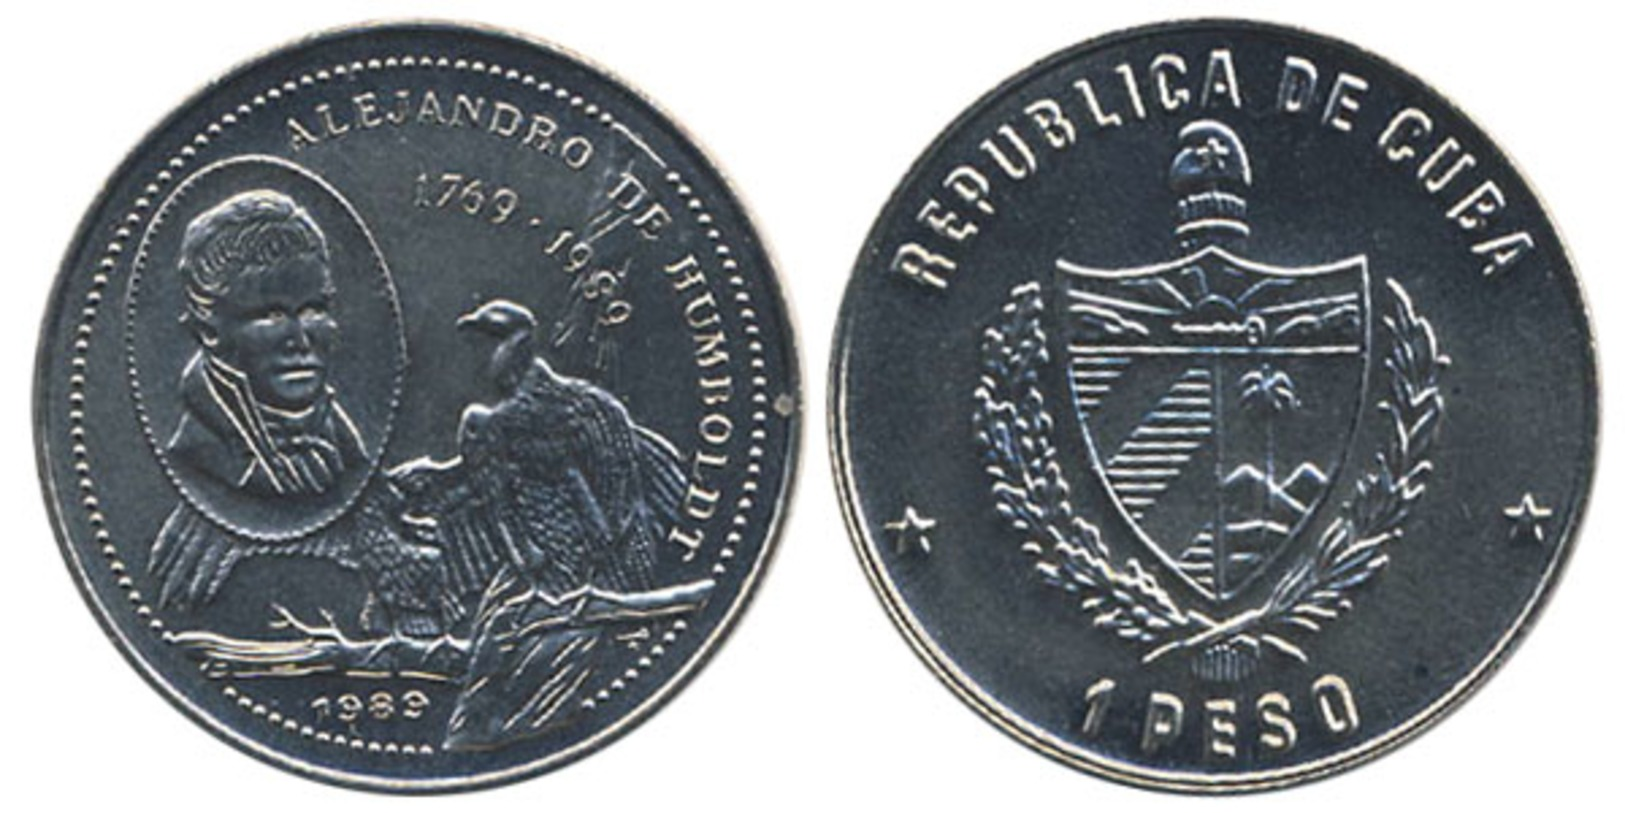 Cuba 1 Peso 1989 "Alexander Von Humboldt" UNC - Kuba